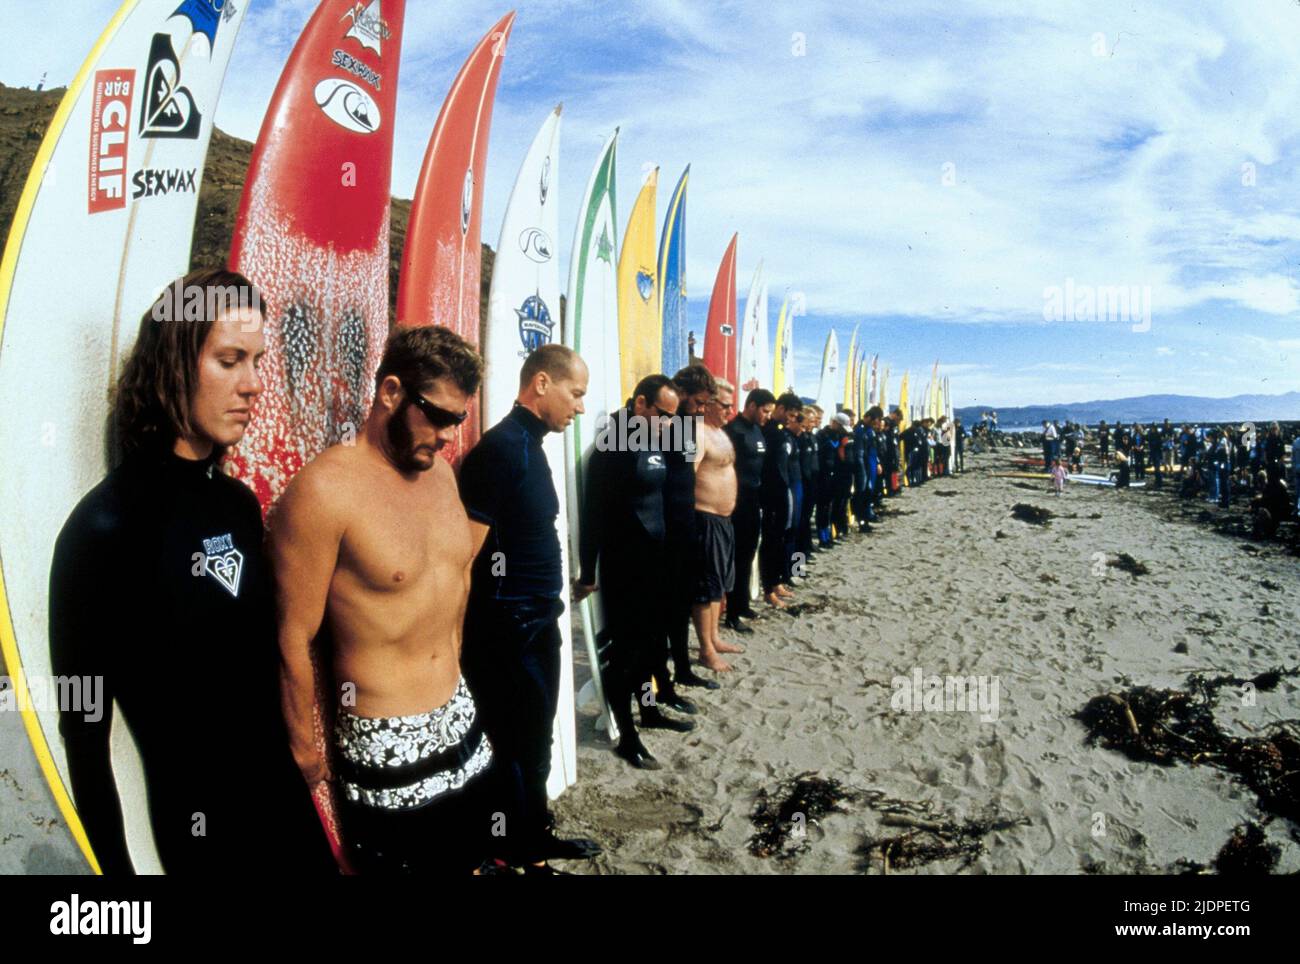 SURFERS RIVOLGO MARK FOO, Riding Giants, 2004 Foto Stock